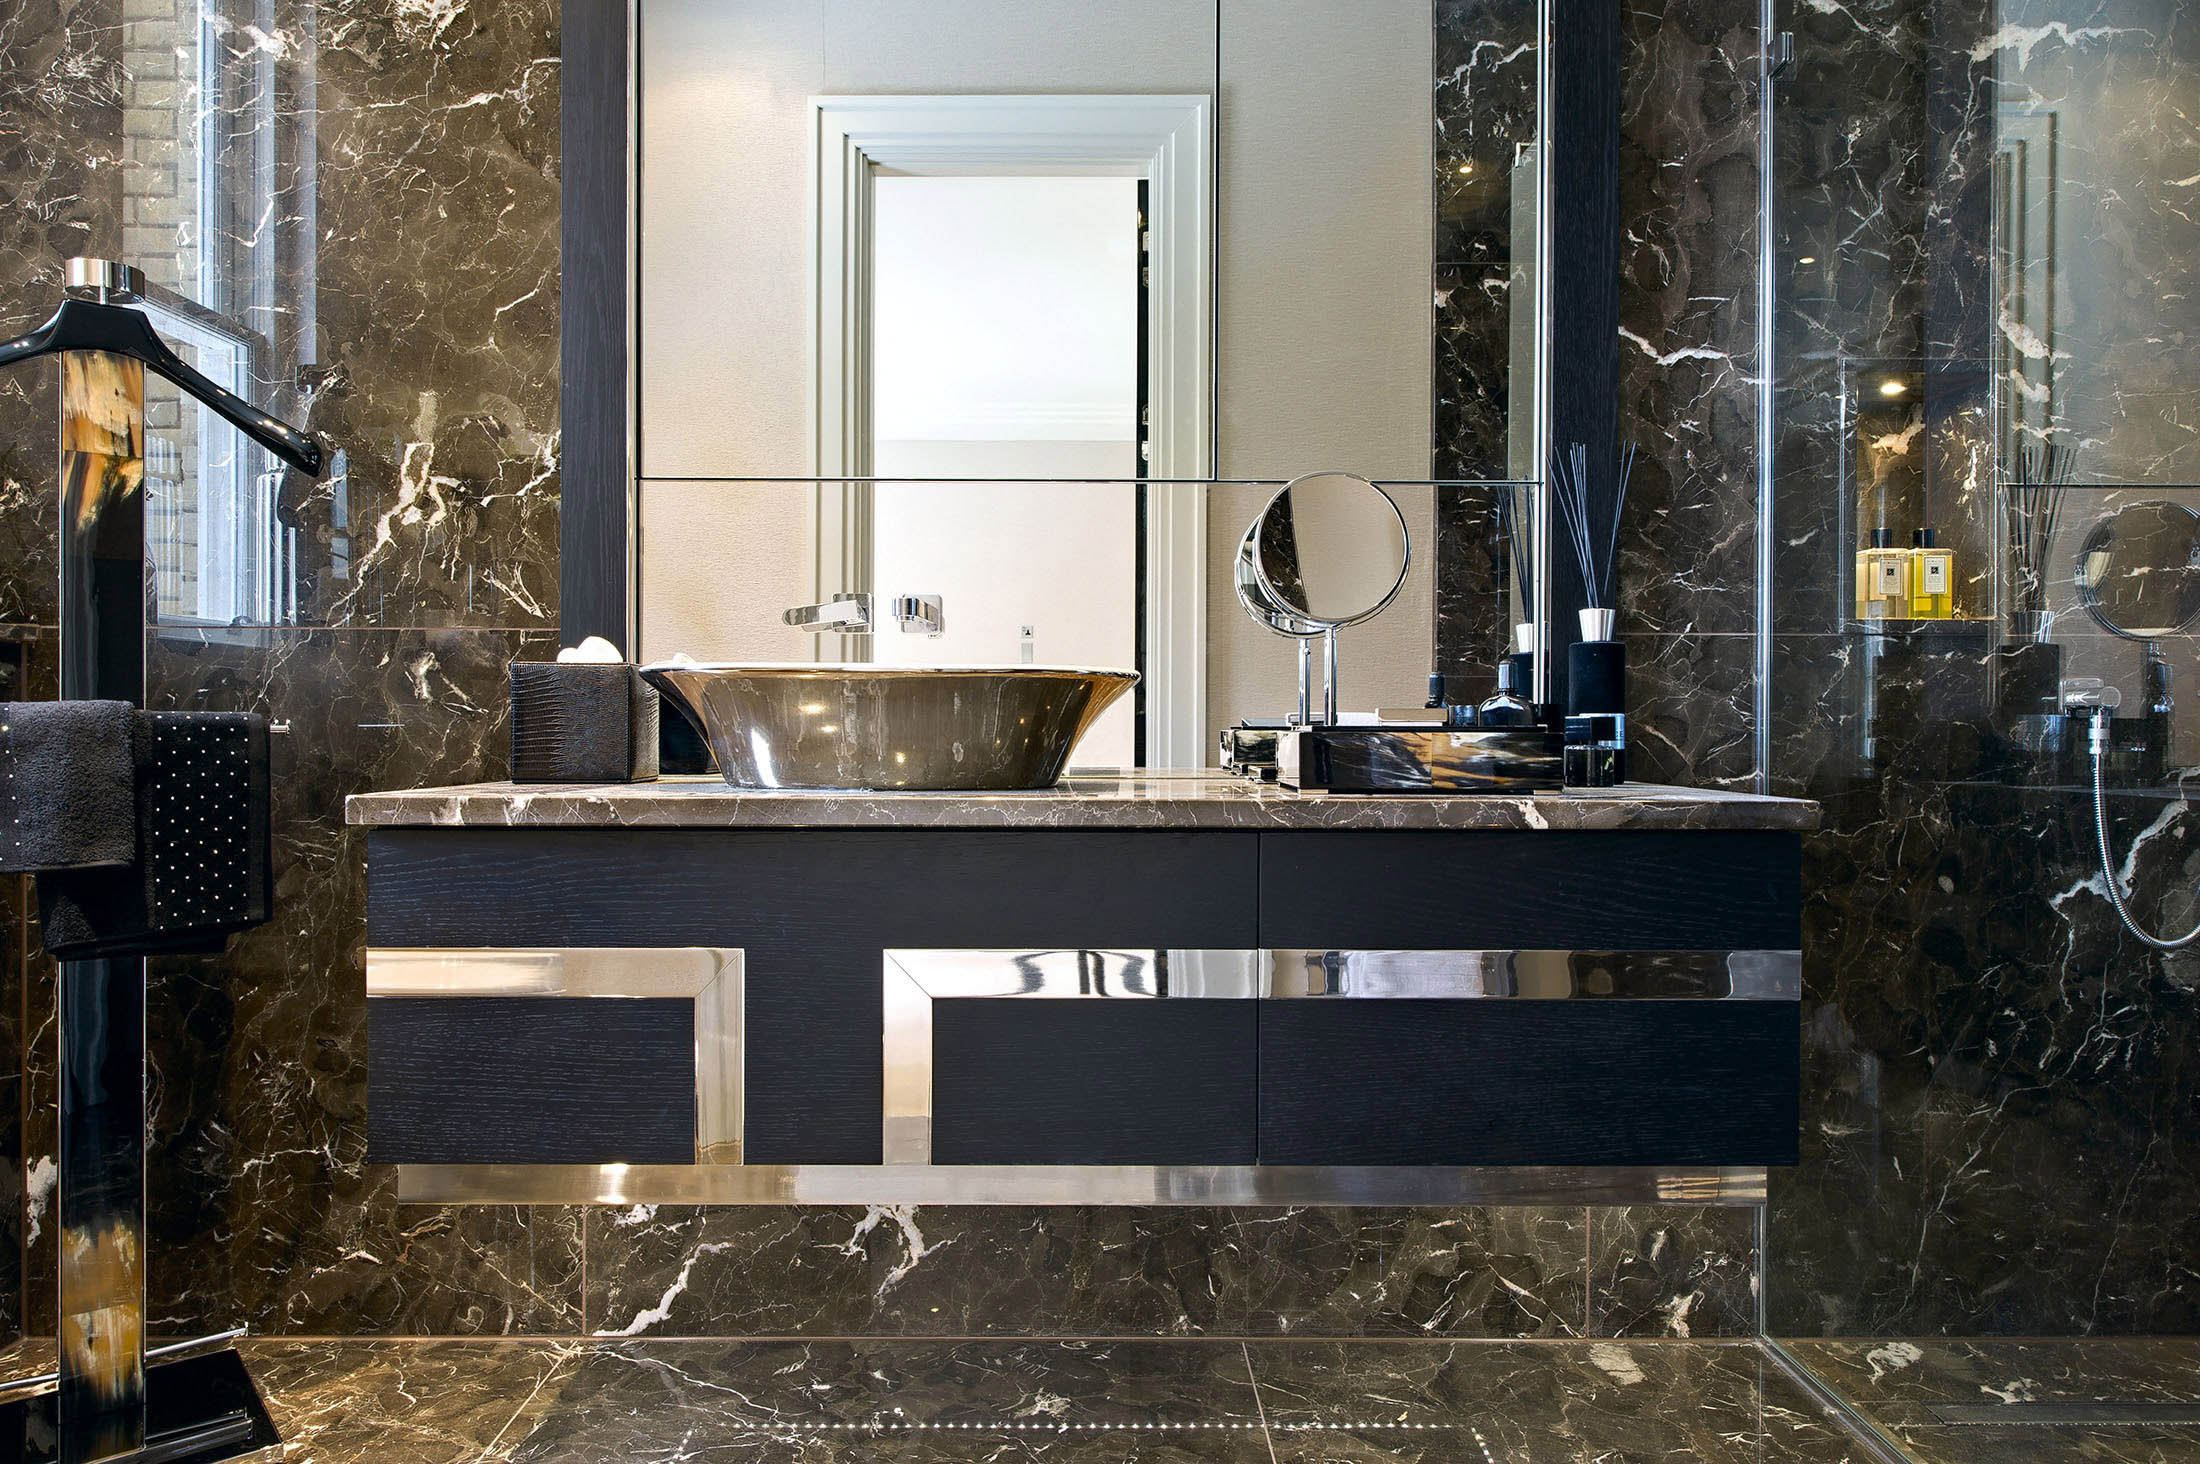 bespoke furniture design surrey heath bathroom 2014 ID&A awards finalist